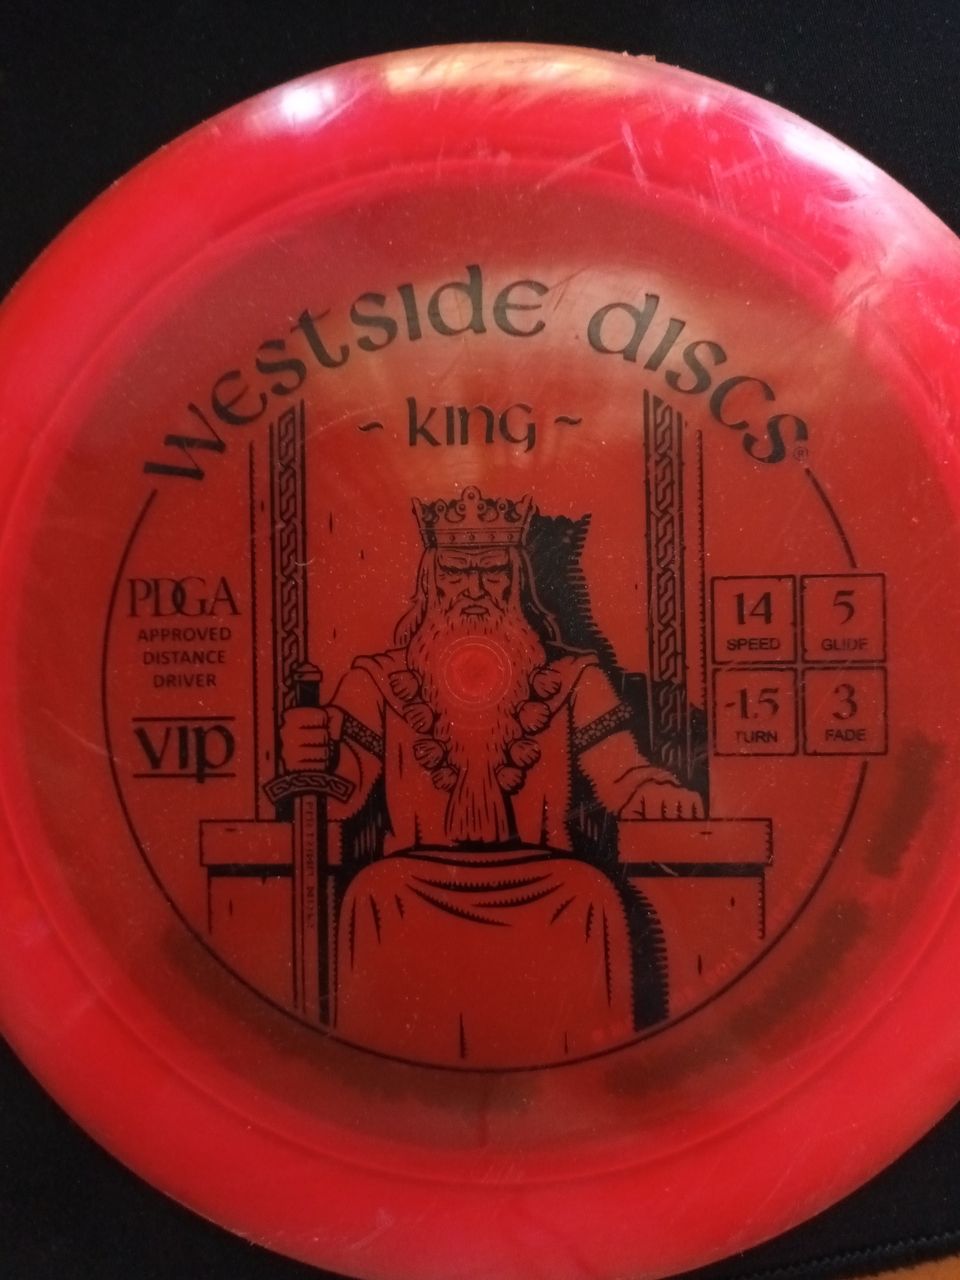 King frisbee